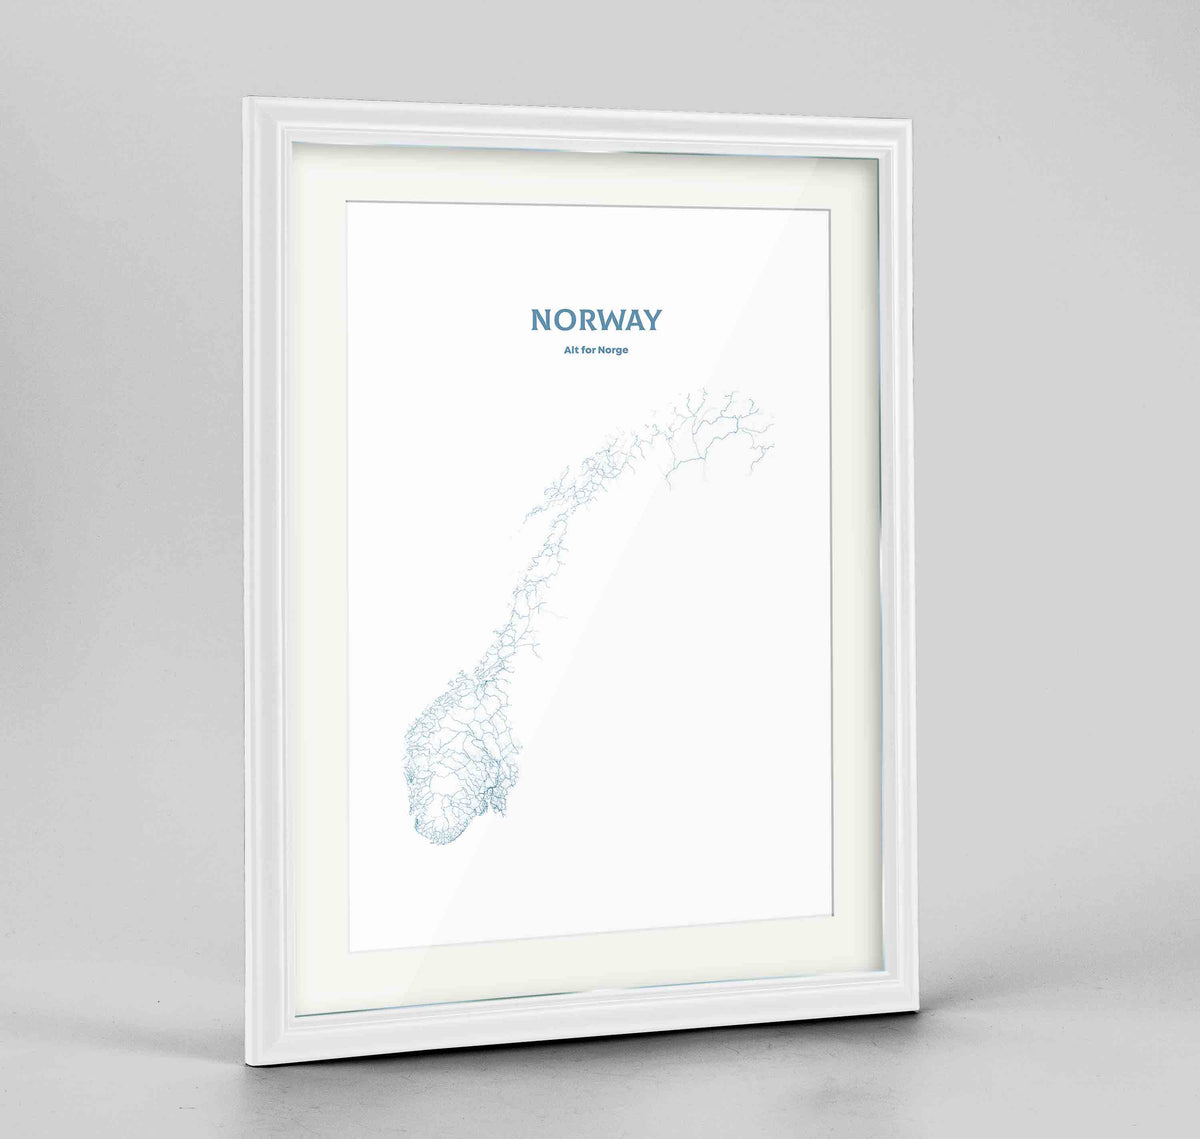 Norway - All Roads Art Print - Framed